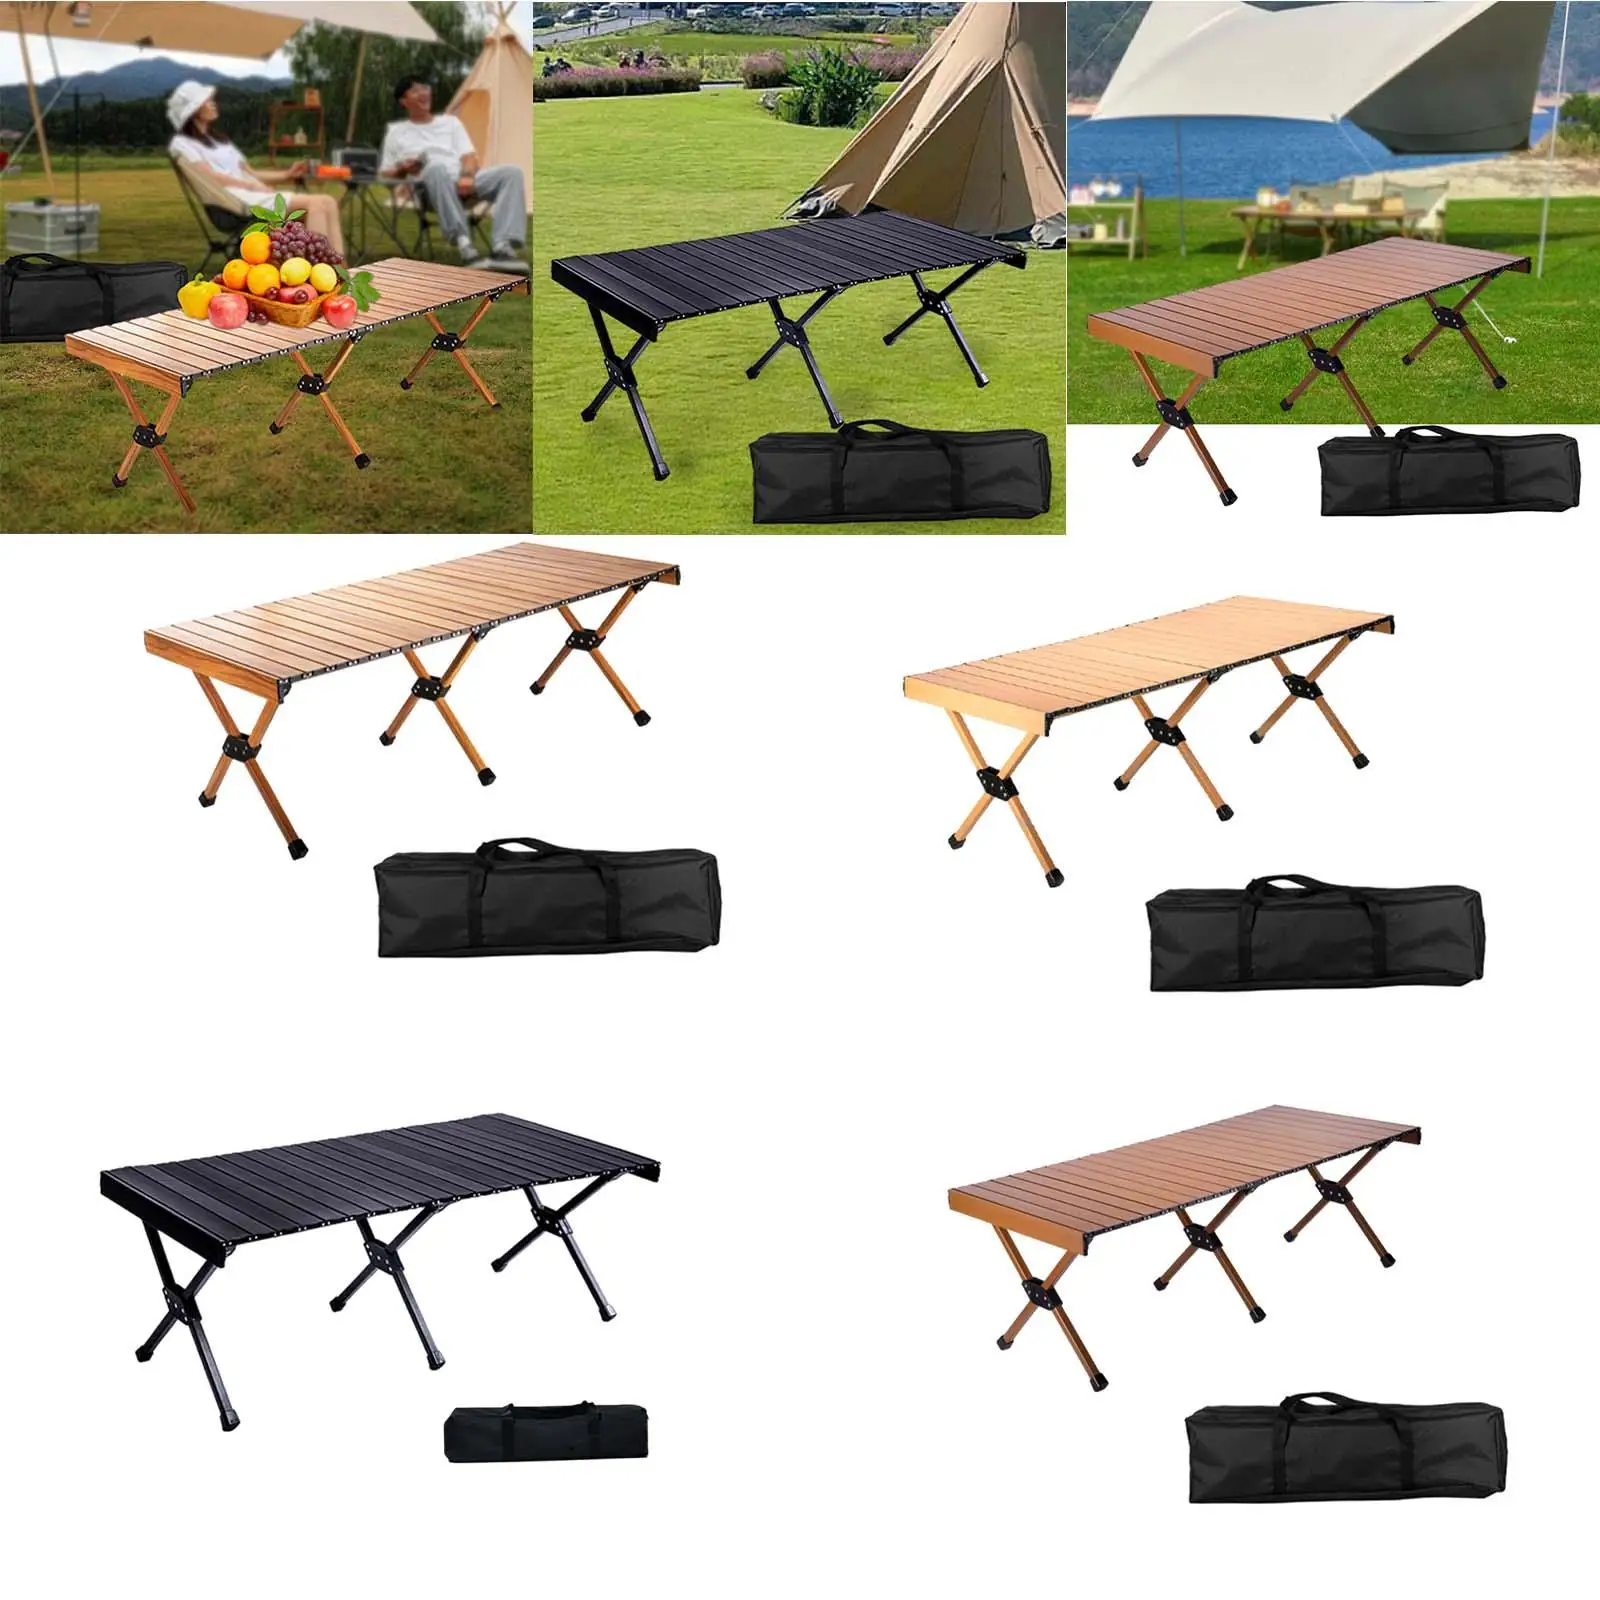 Camping Folding Table, Foldable Picnic Table, Camping Table Picnic Table for Cooking Outdoor Indoor Picnic Backyard Beach